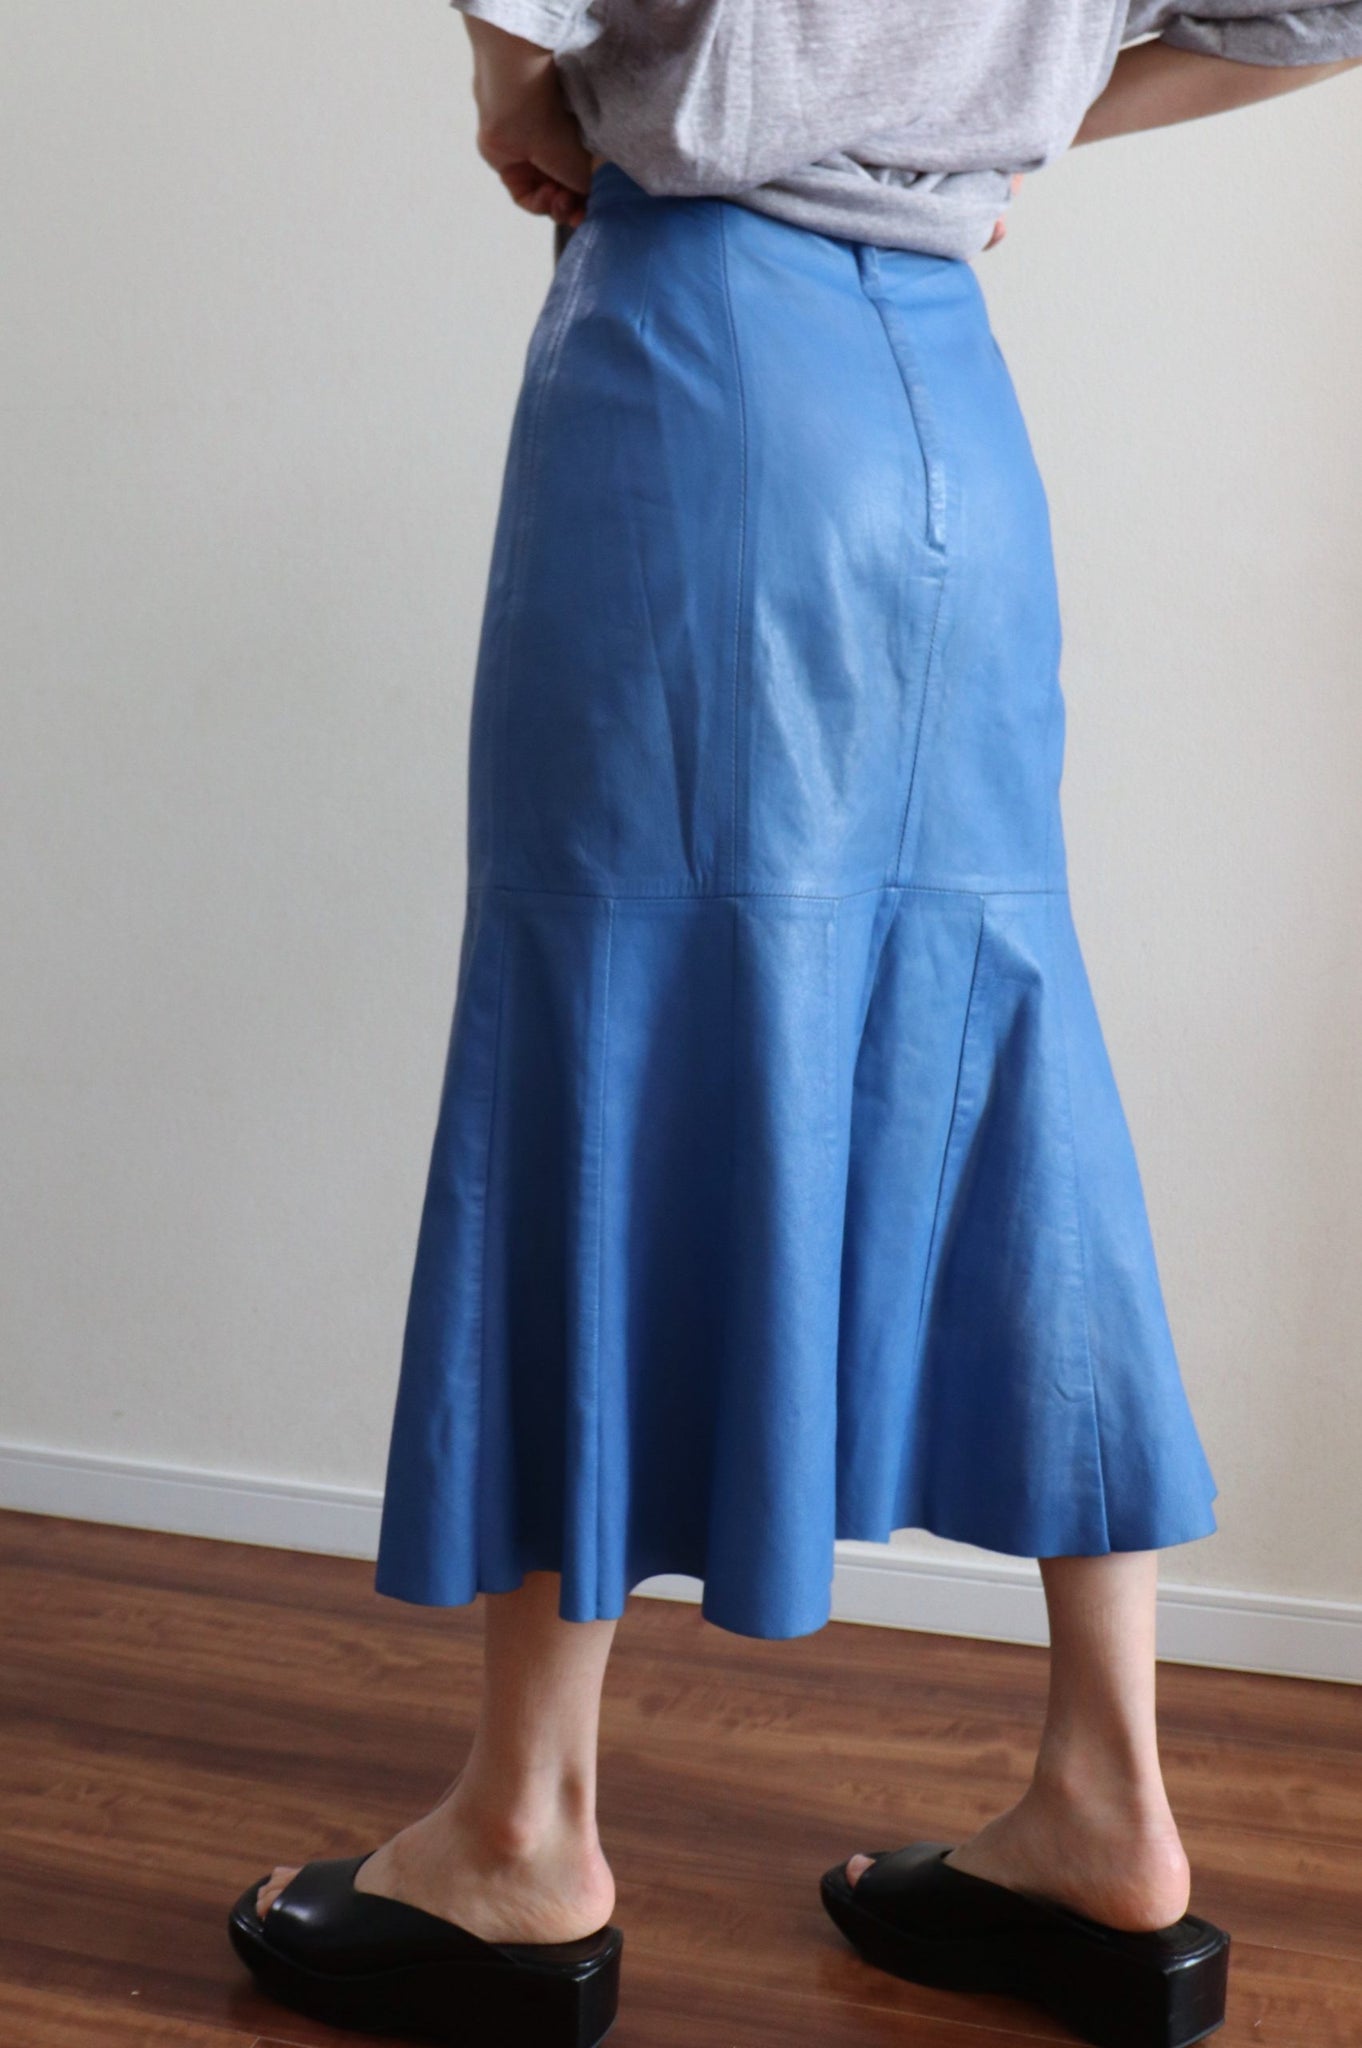 80s Peplum Leather Skirt